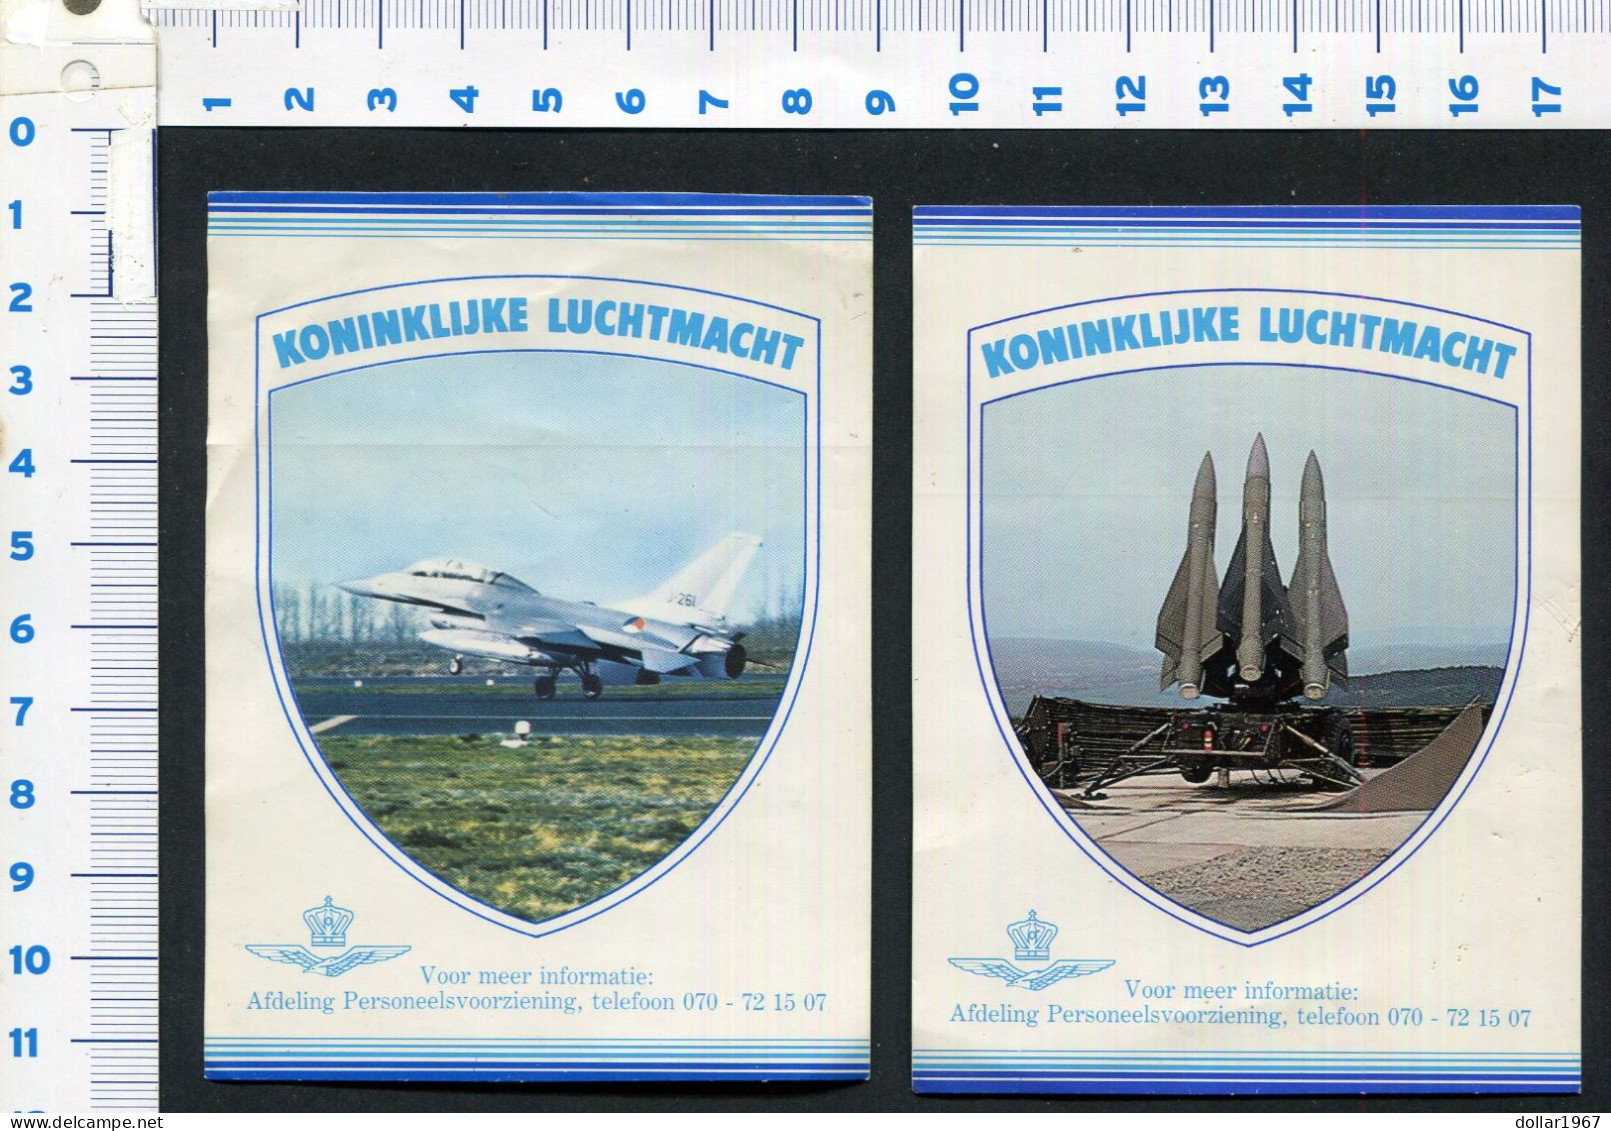 4 X Stickers - Koninklijke Luchtmacht .  - Not Used  - 2 Scans For Originalscan !! - Aviation